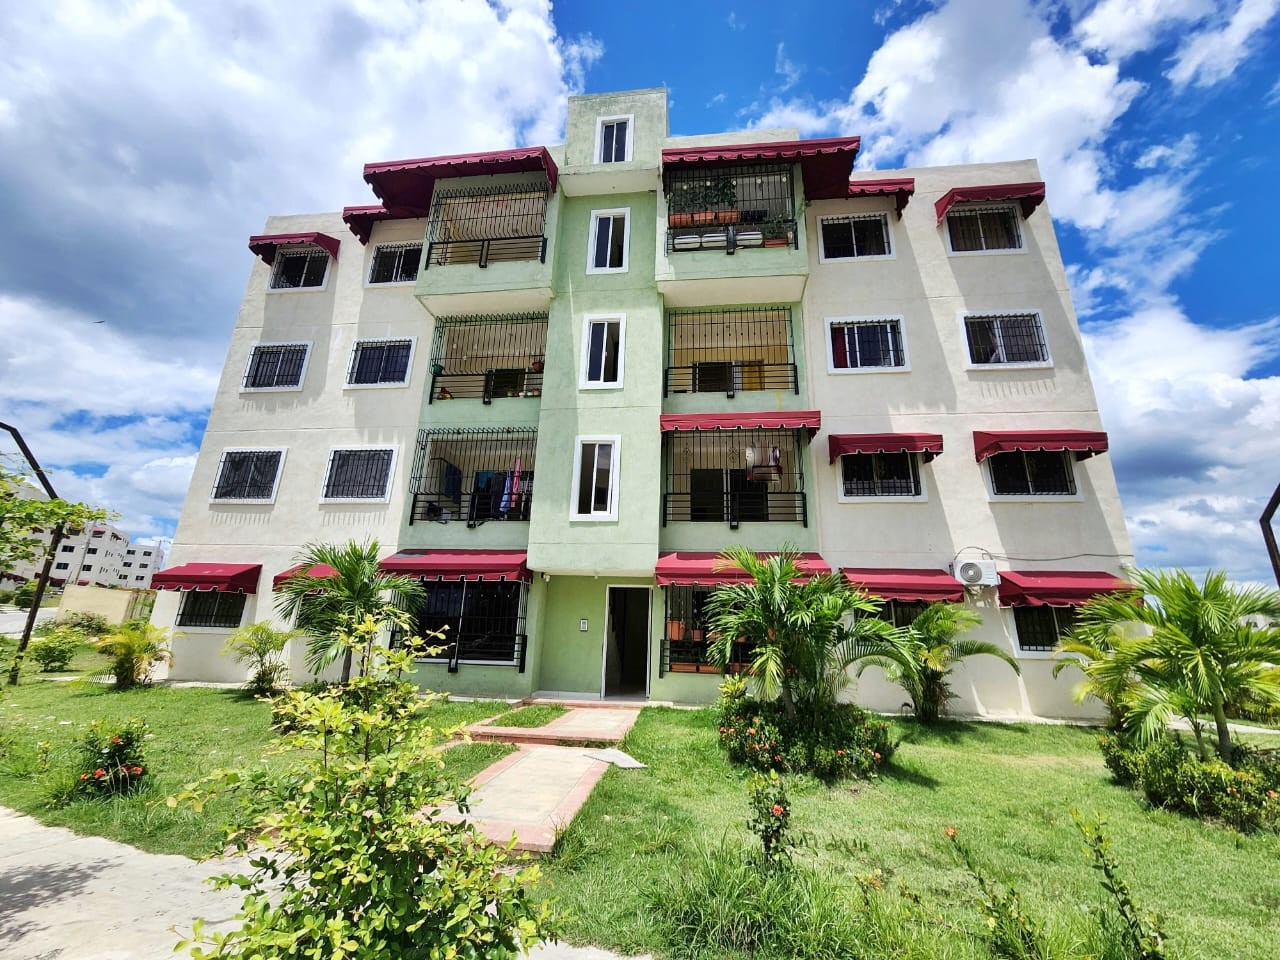 apartamentos - Apartamento en La Jacobo Majluta, Residencial Juan Rafael.
